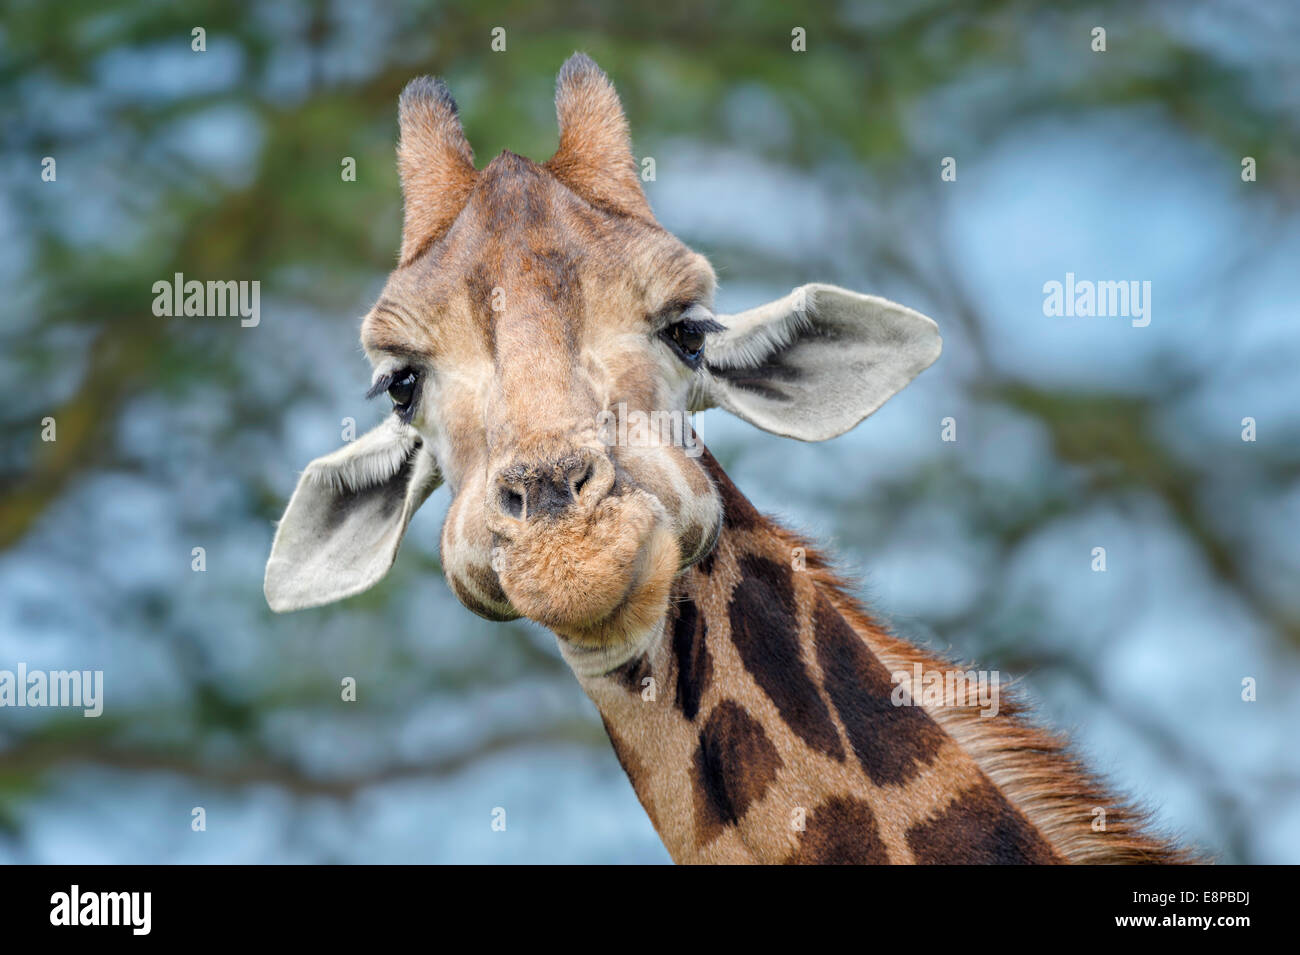 Goofy giraffe looking down and into camera Stock Photo